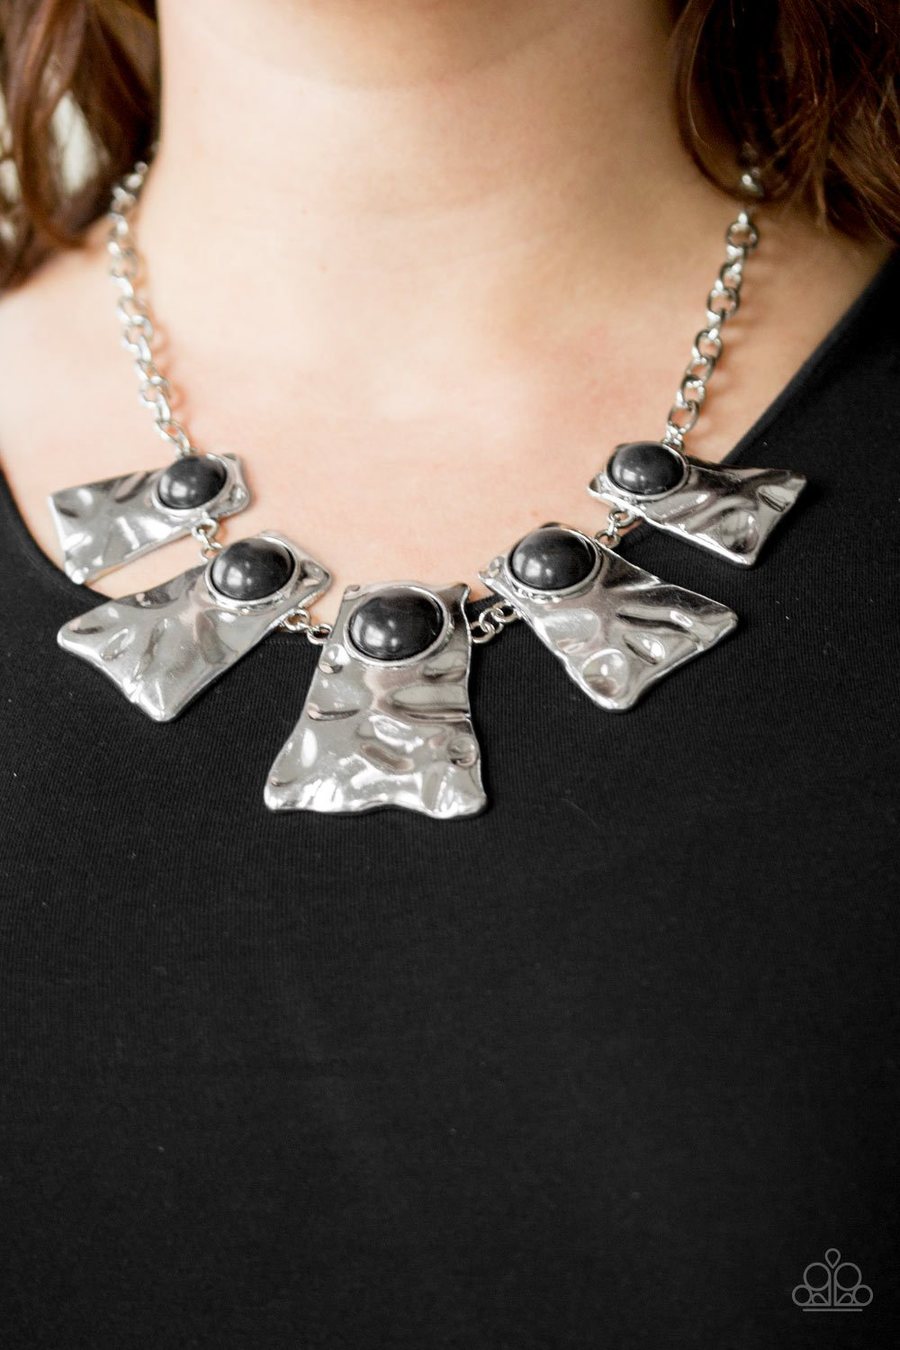 Cougar - black - Paparazzi necklace - $5 Jewelry with Ashley Swint